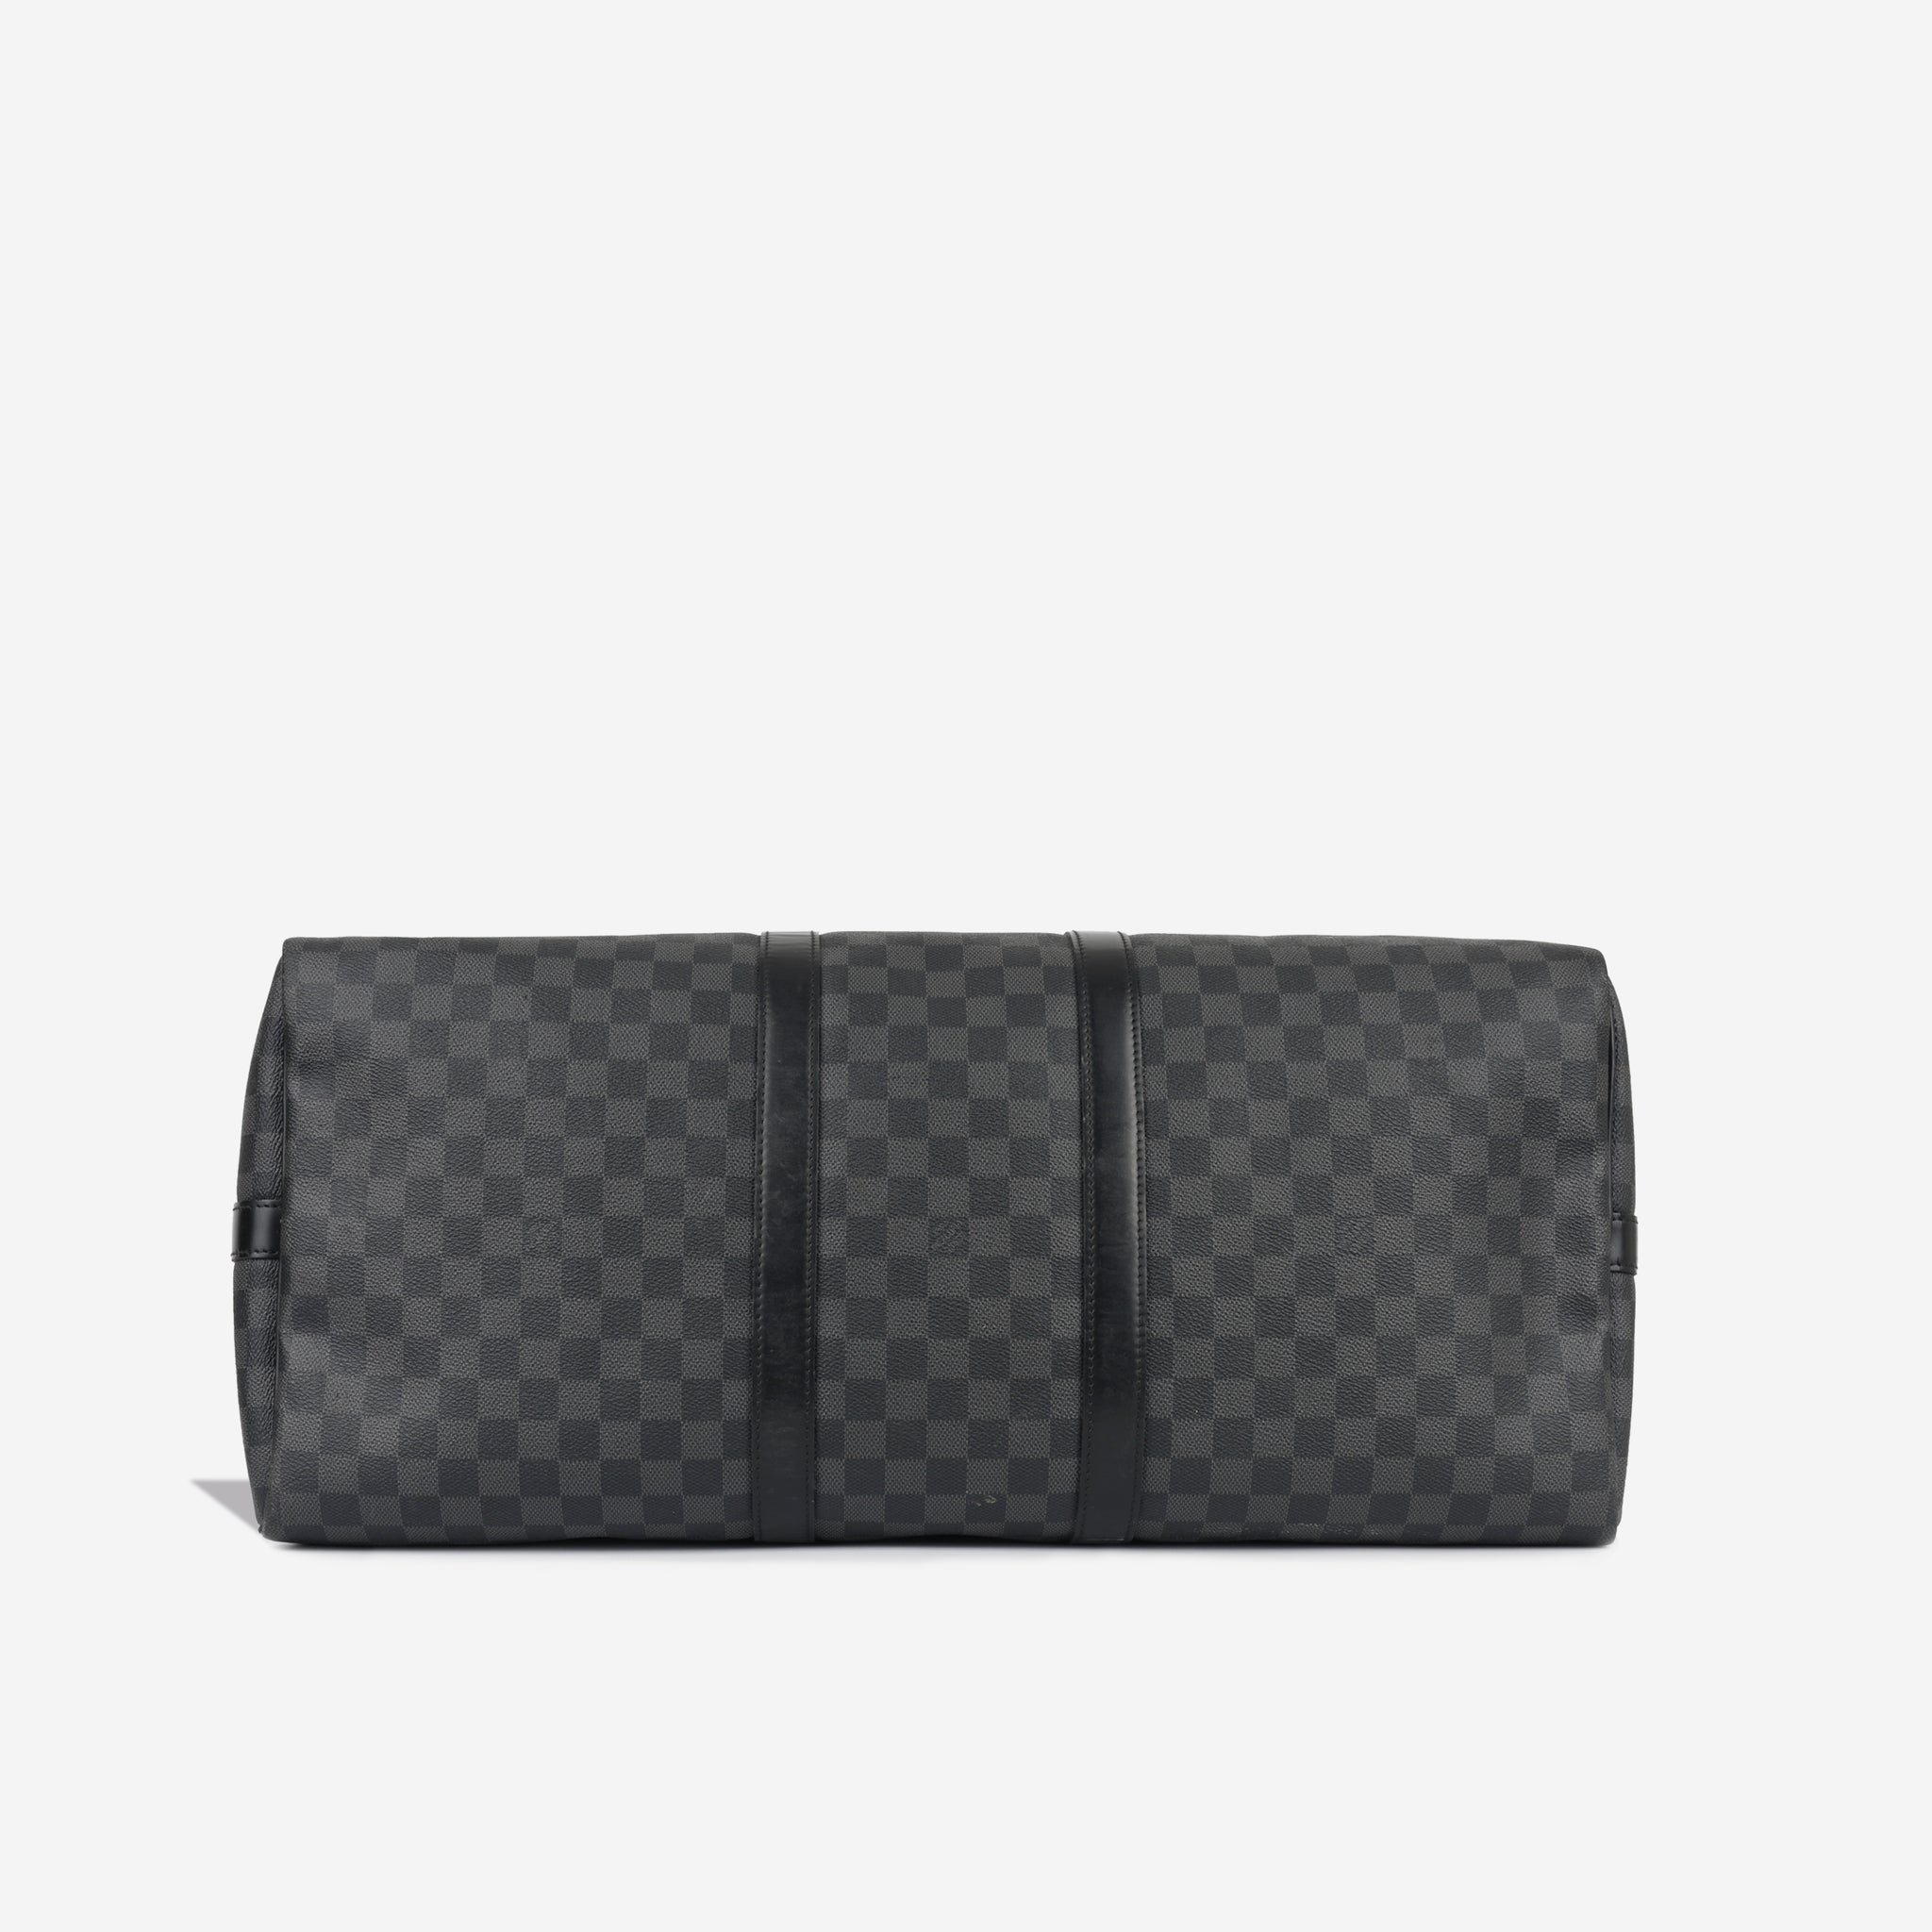 Louis Vuitton Keepall Bandouliere Damier Graphite 45 Black/Graphite - US